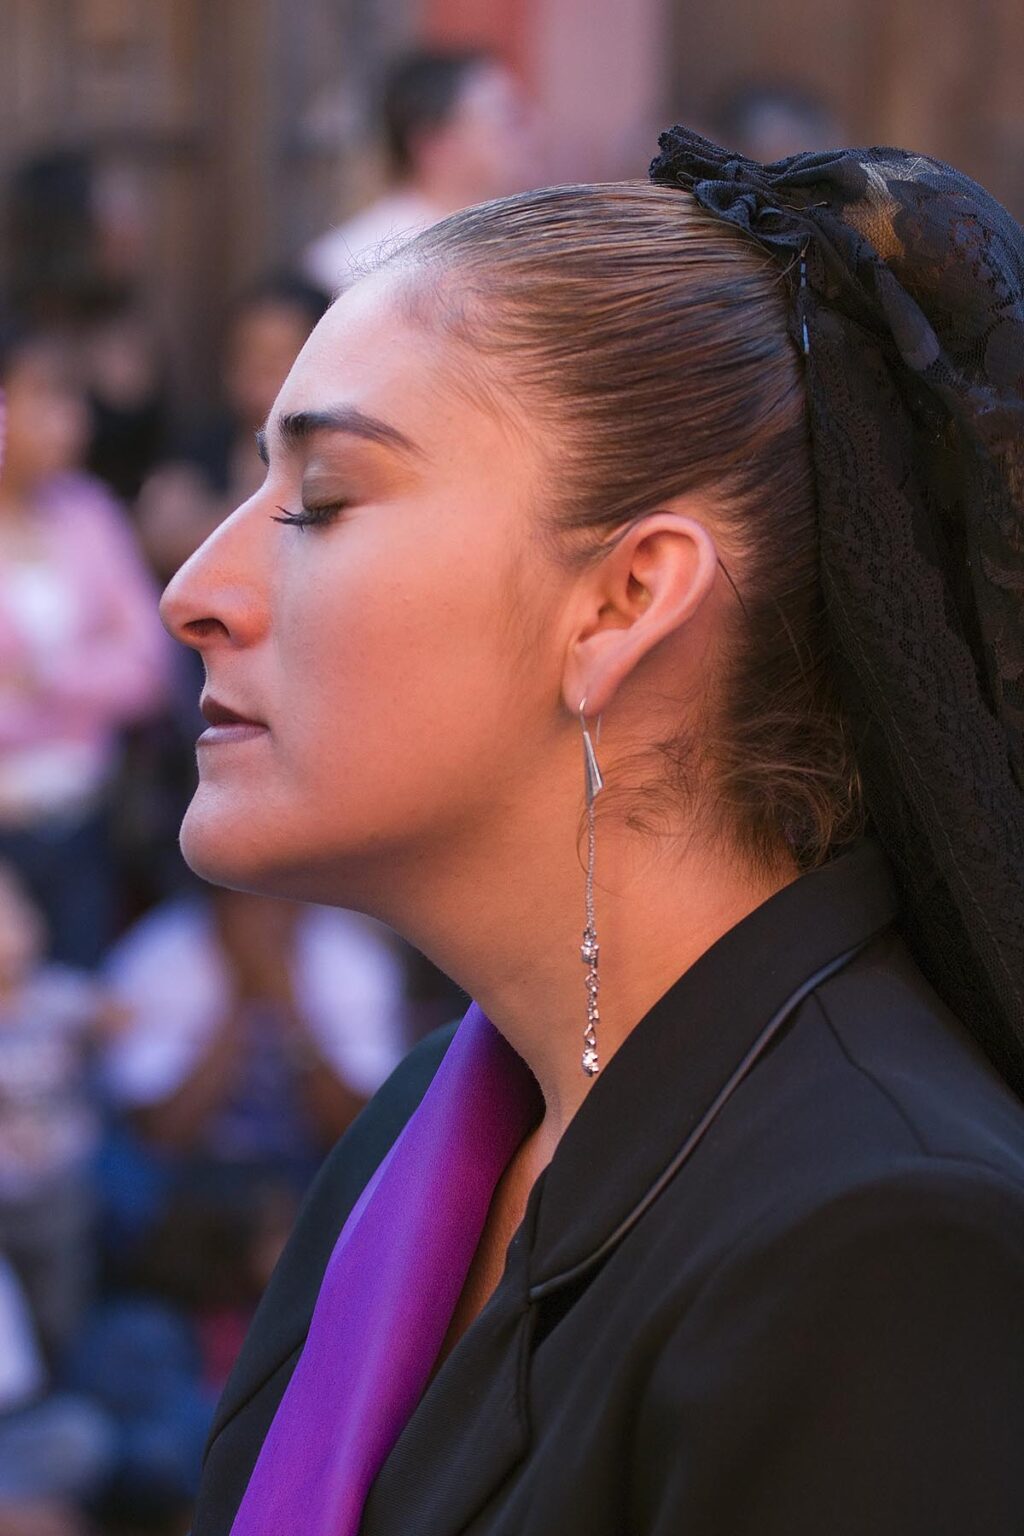 MEXICAN woman dressed in black during EASTER PROCESSION - TEMPLO DEL ORATORIO, SAN MIGUEL DE ALLENDE, MEXICO